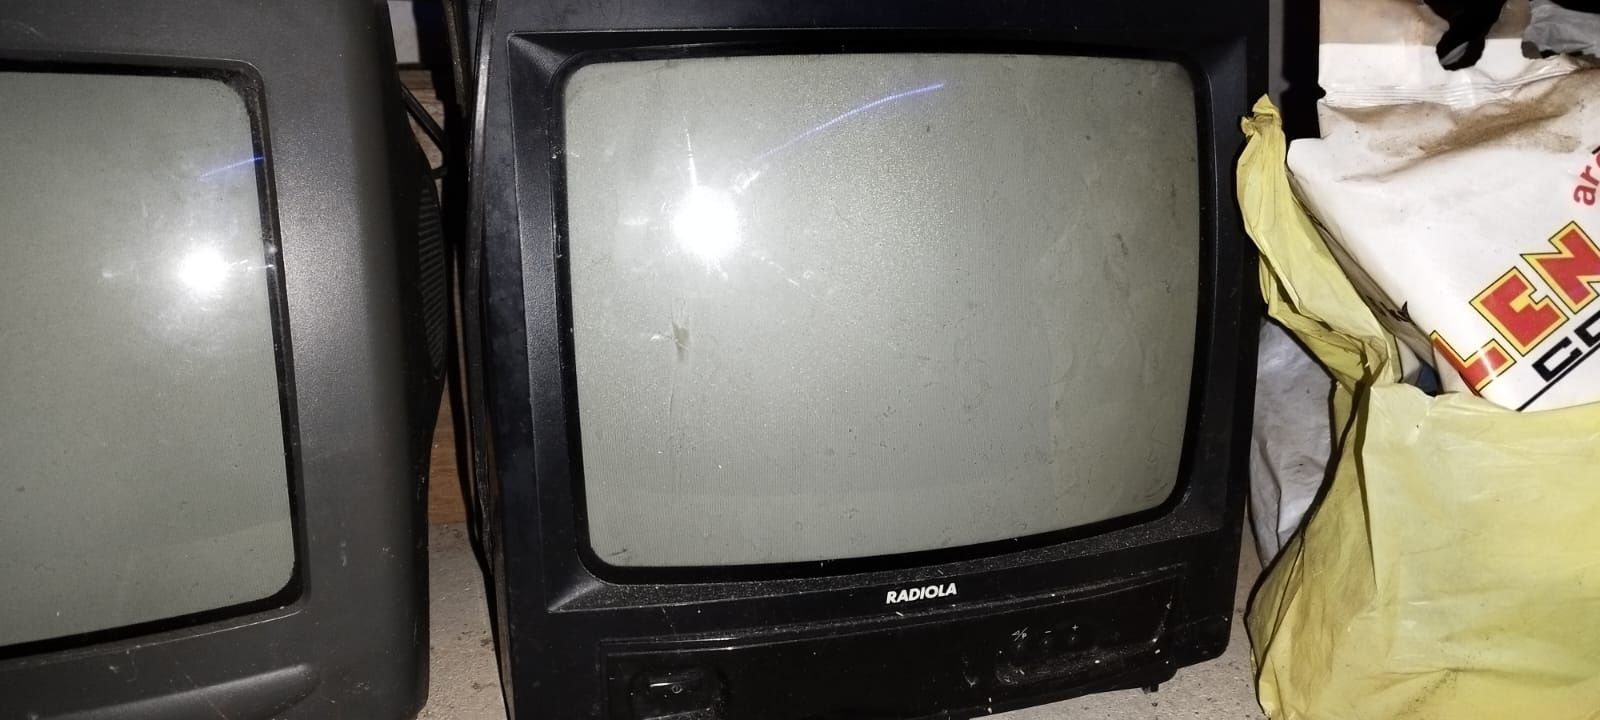 3 tvs das antigas/funcionais